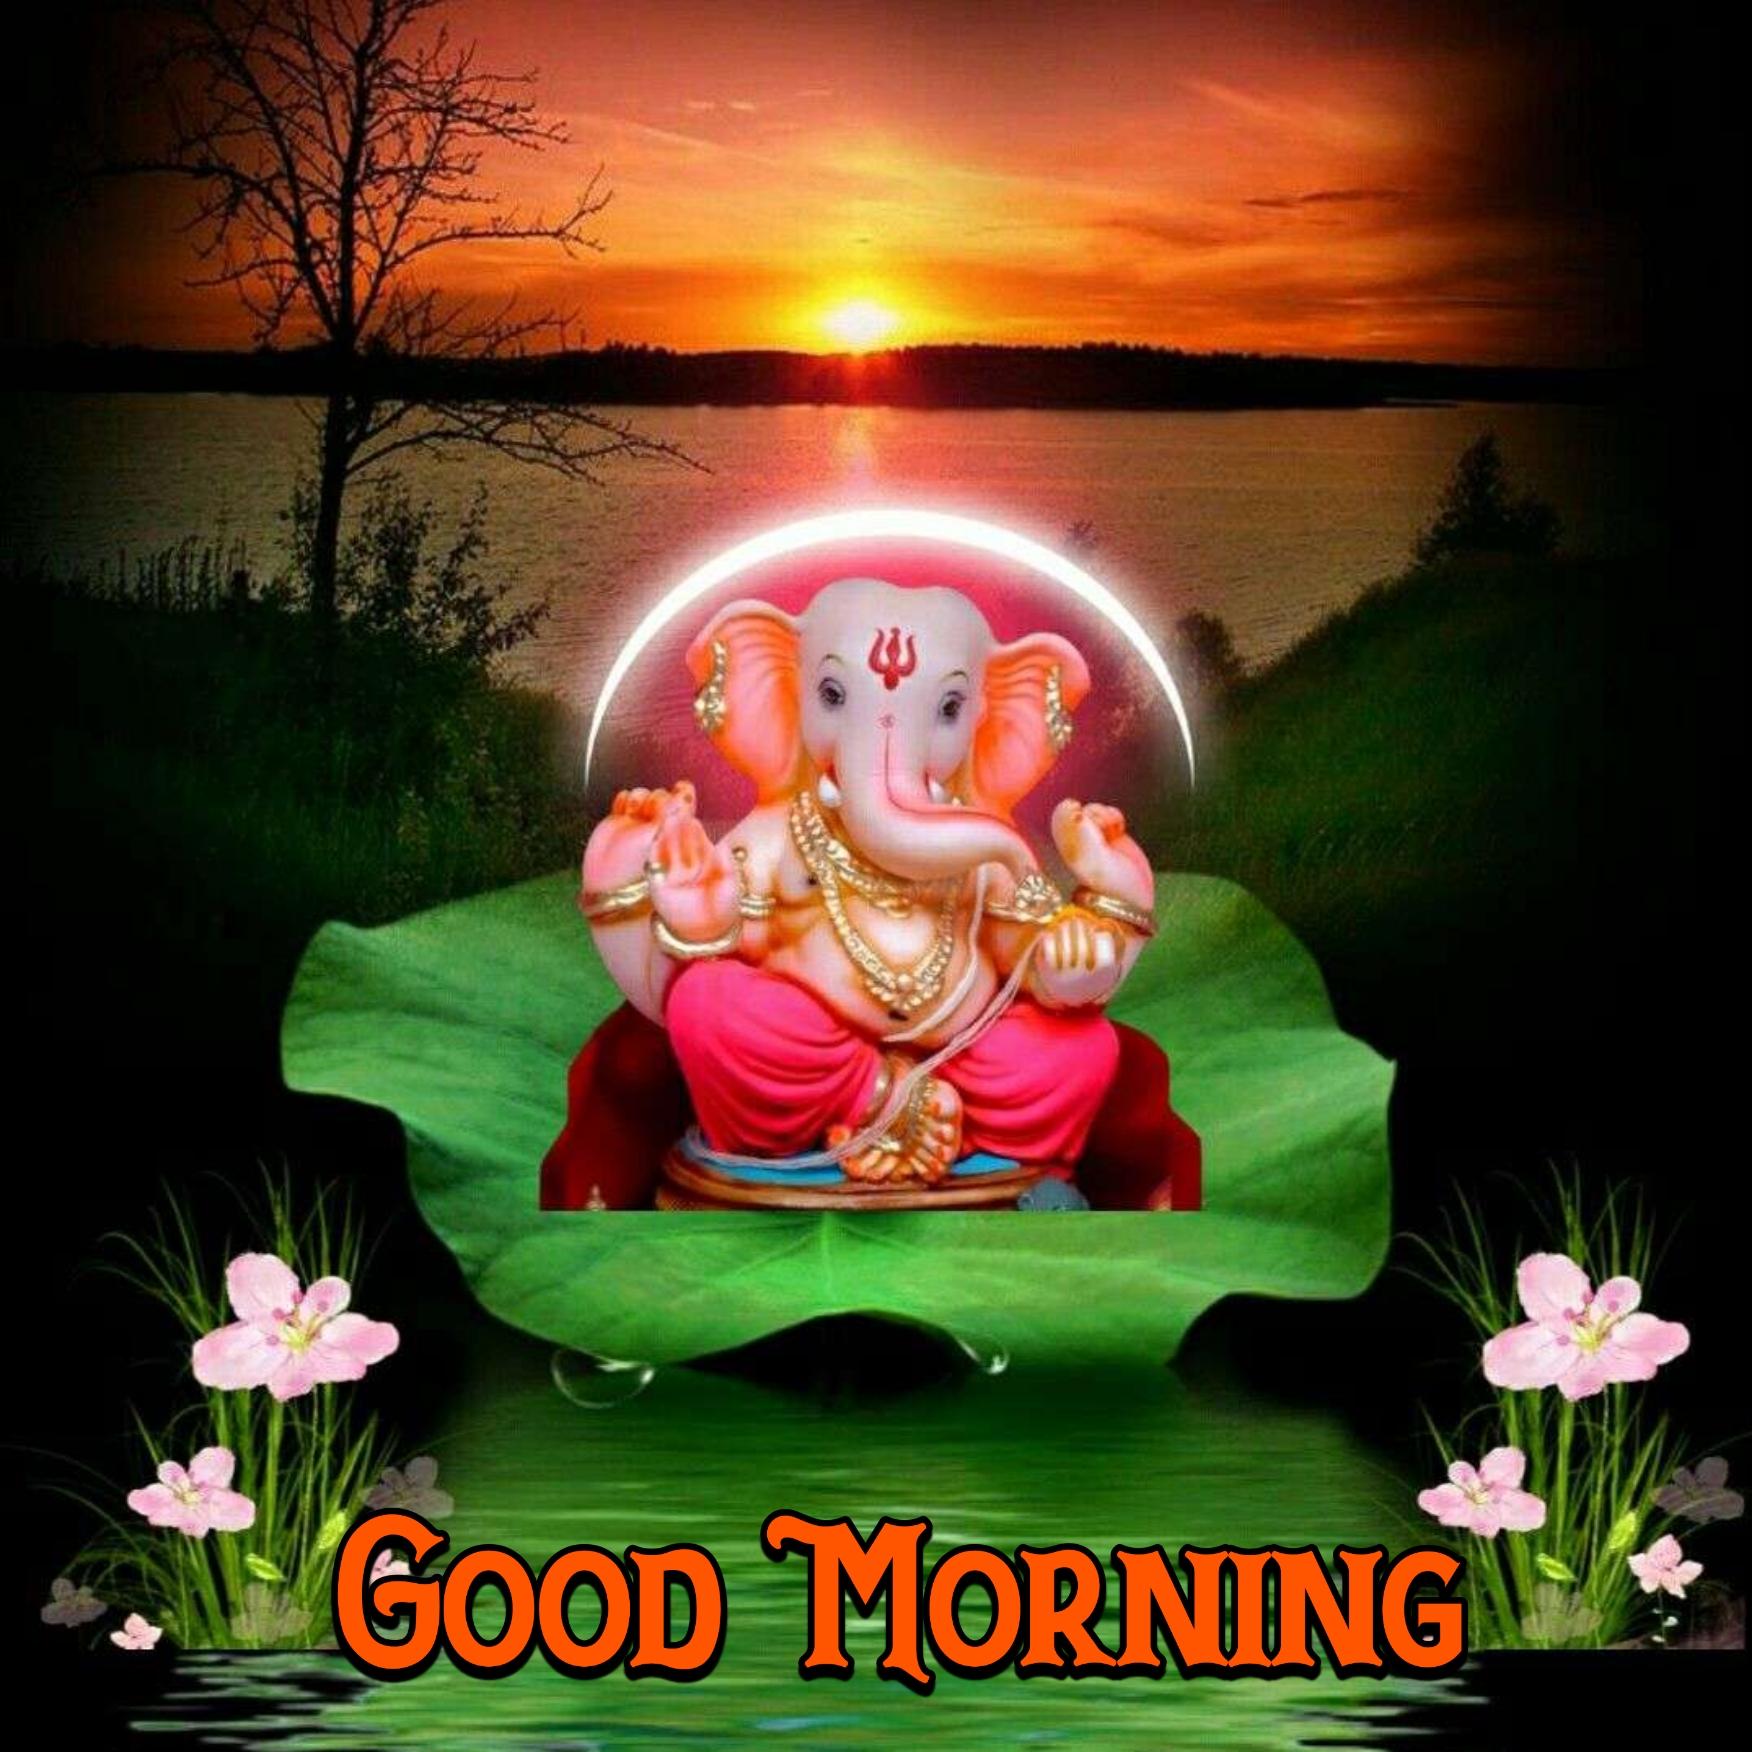 Good Morning Ganpati Bappa Images